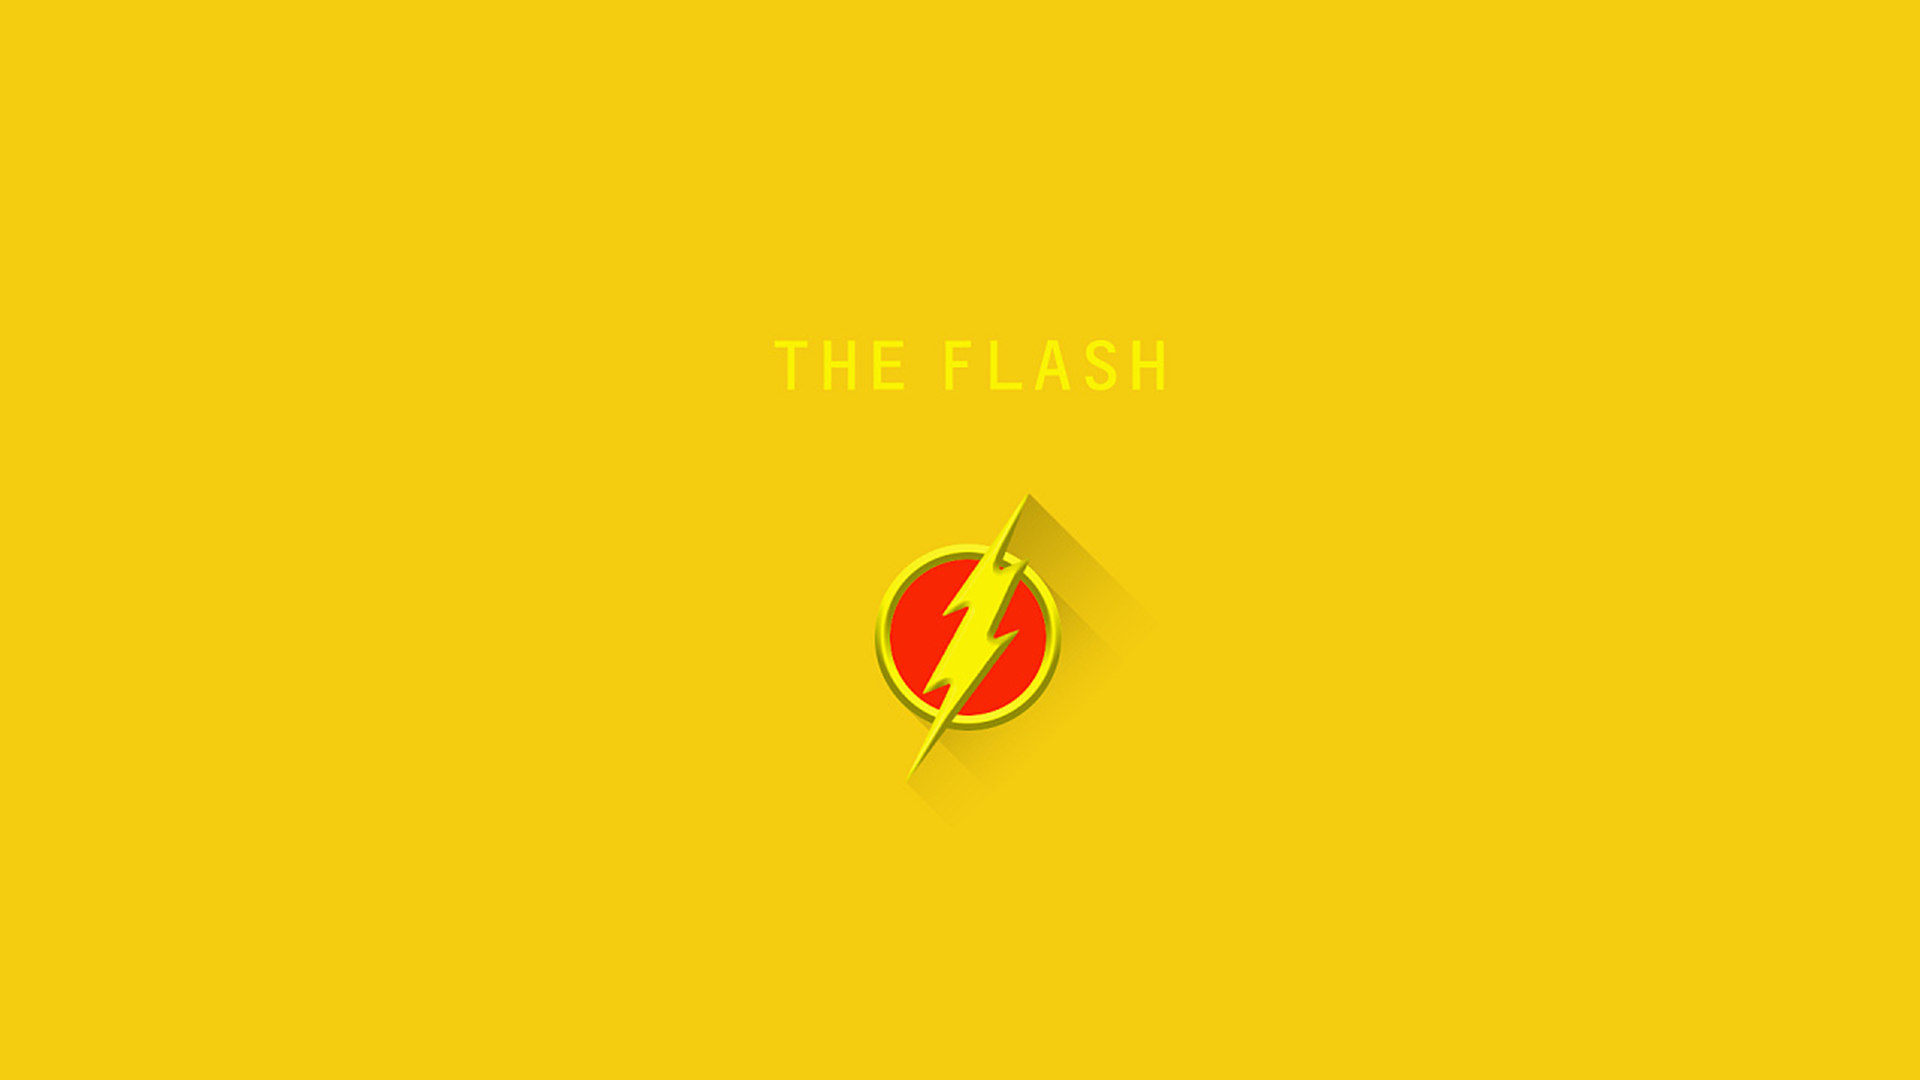 一般 1920x1080 极简主义 DC Comics 标志 The Flash simple background 黄色背景